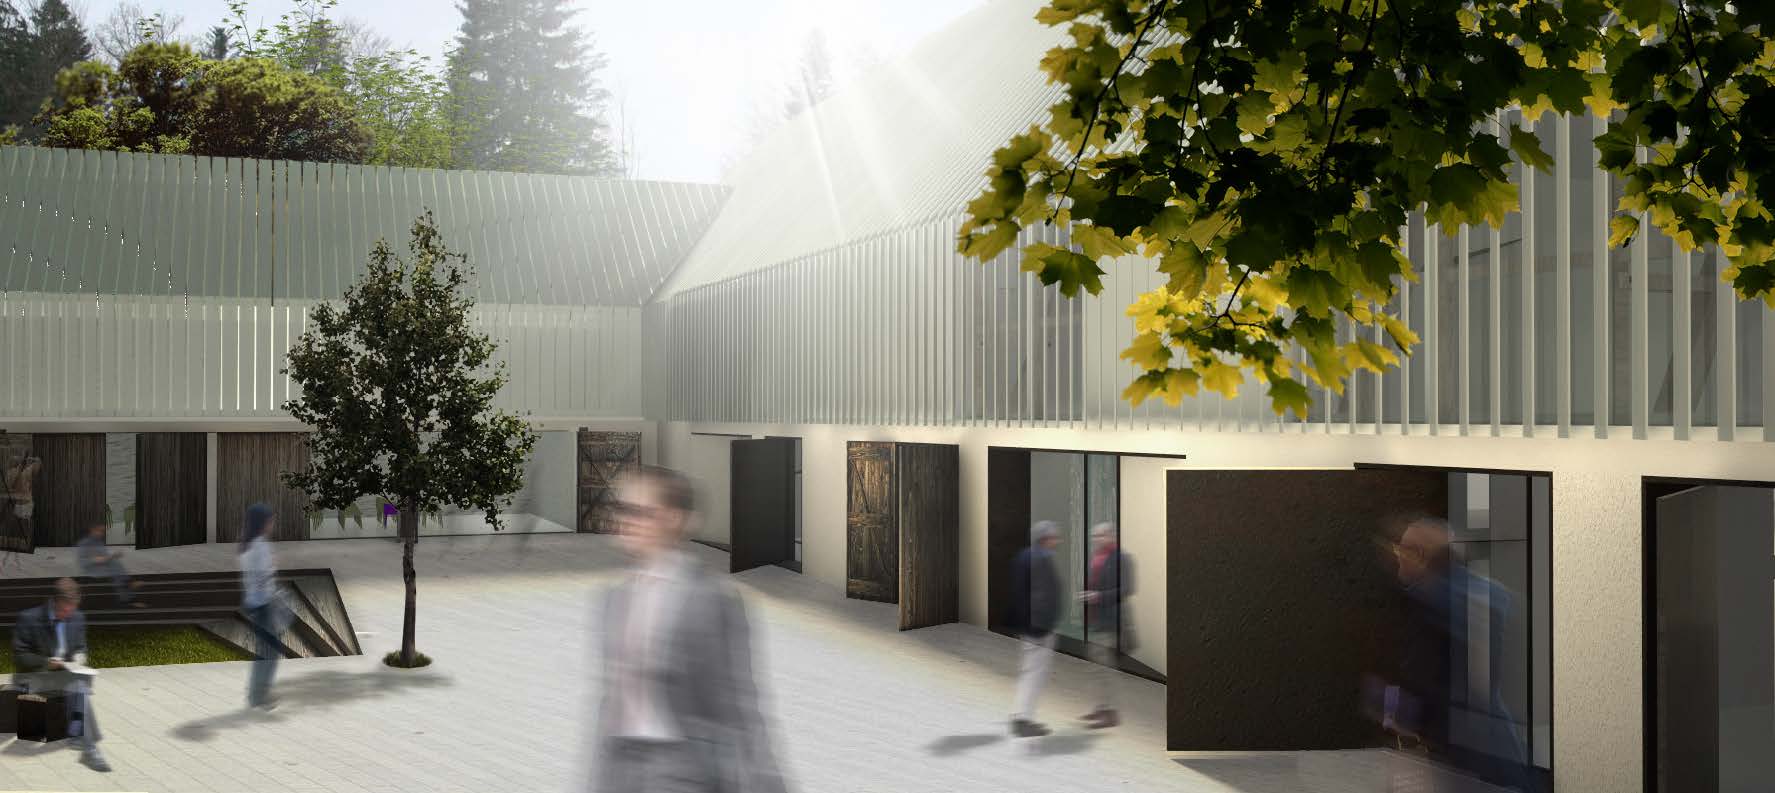 Perspektive Innenhof mit neuer Gebäudehülle (Abb.: Anna Stark)